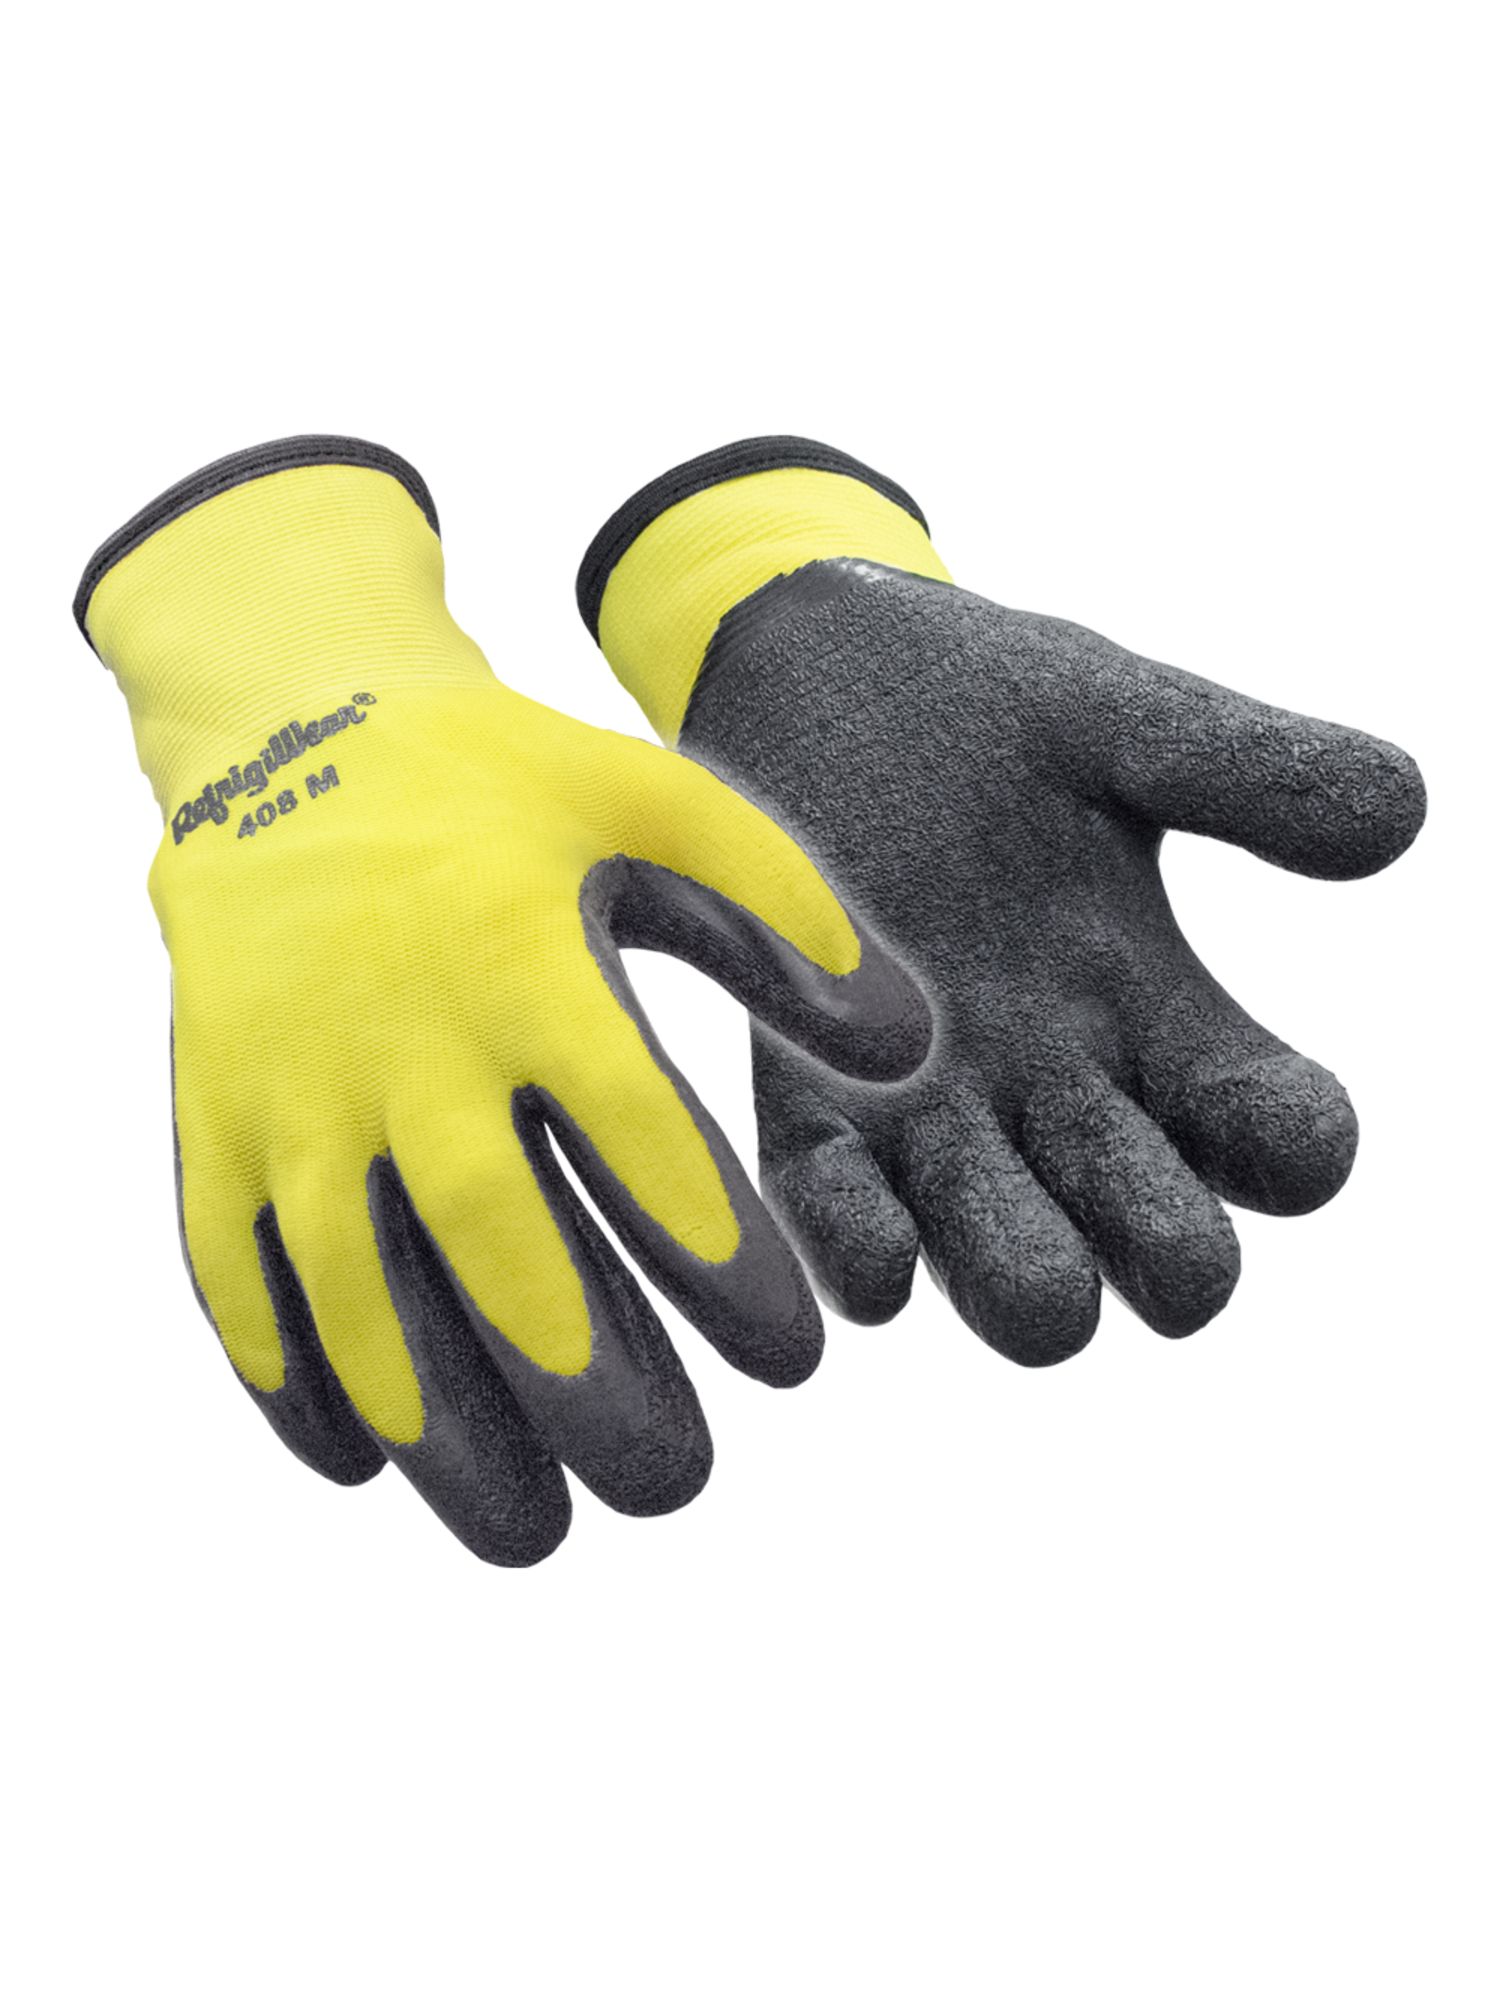 Dual-Layer HiVis Glove | RefrigiWear (408) Ergo